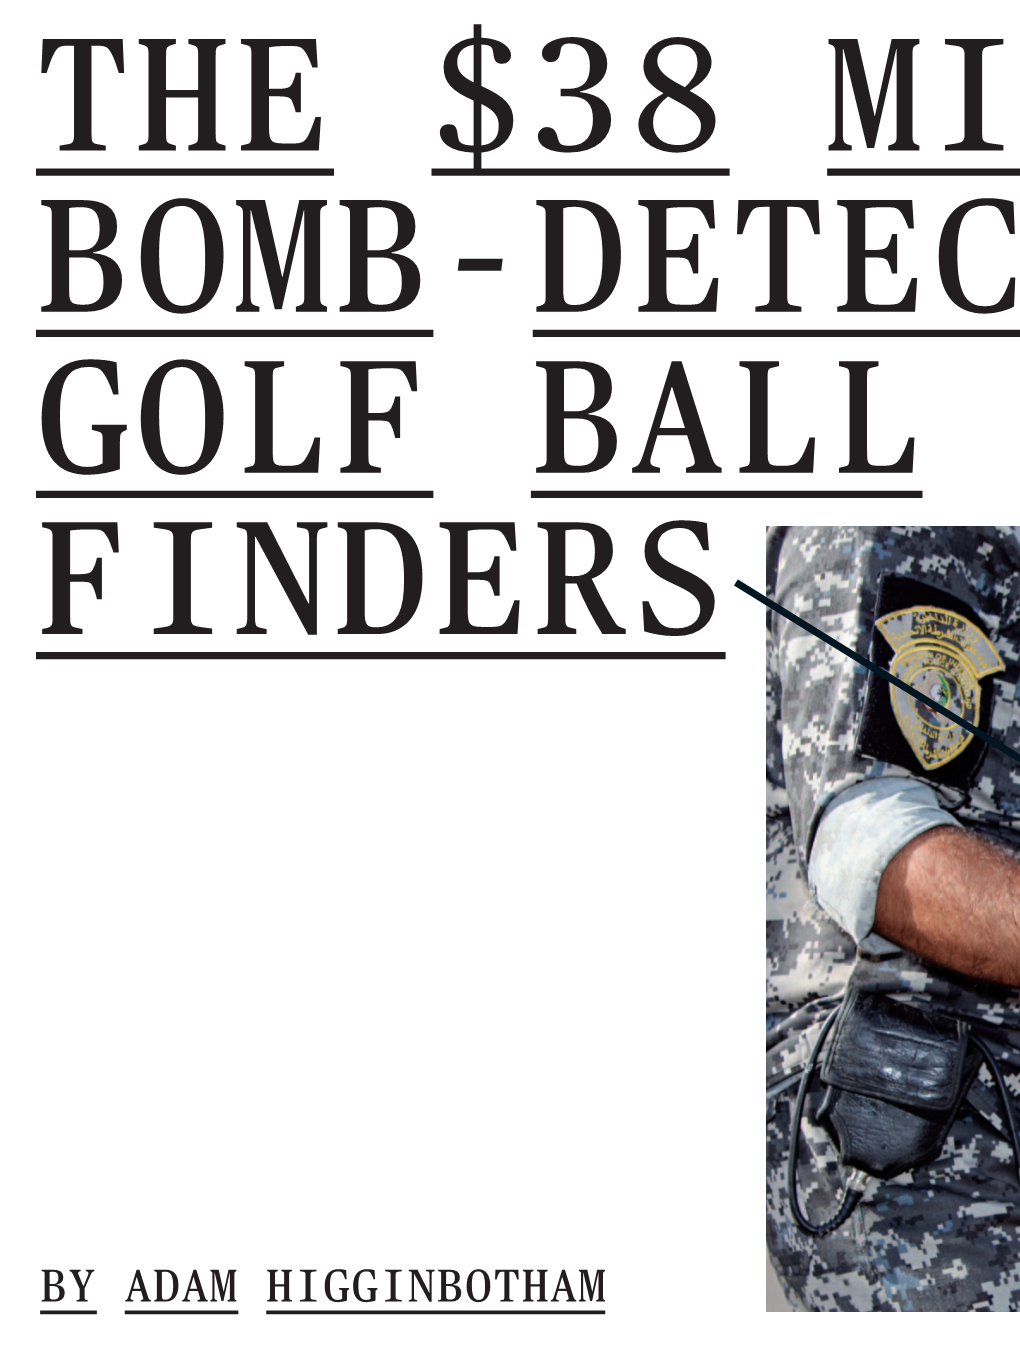 By Adam Higginbotham the $38 Million Bomb-Detecting Golf Ball Finders 55 on Dec